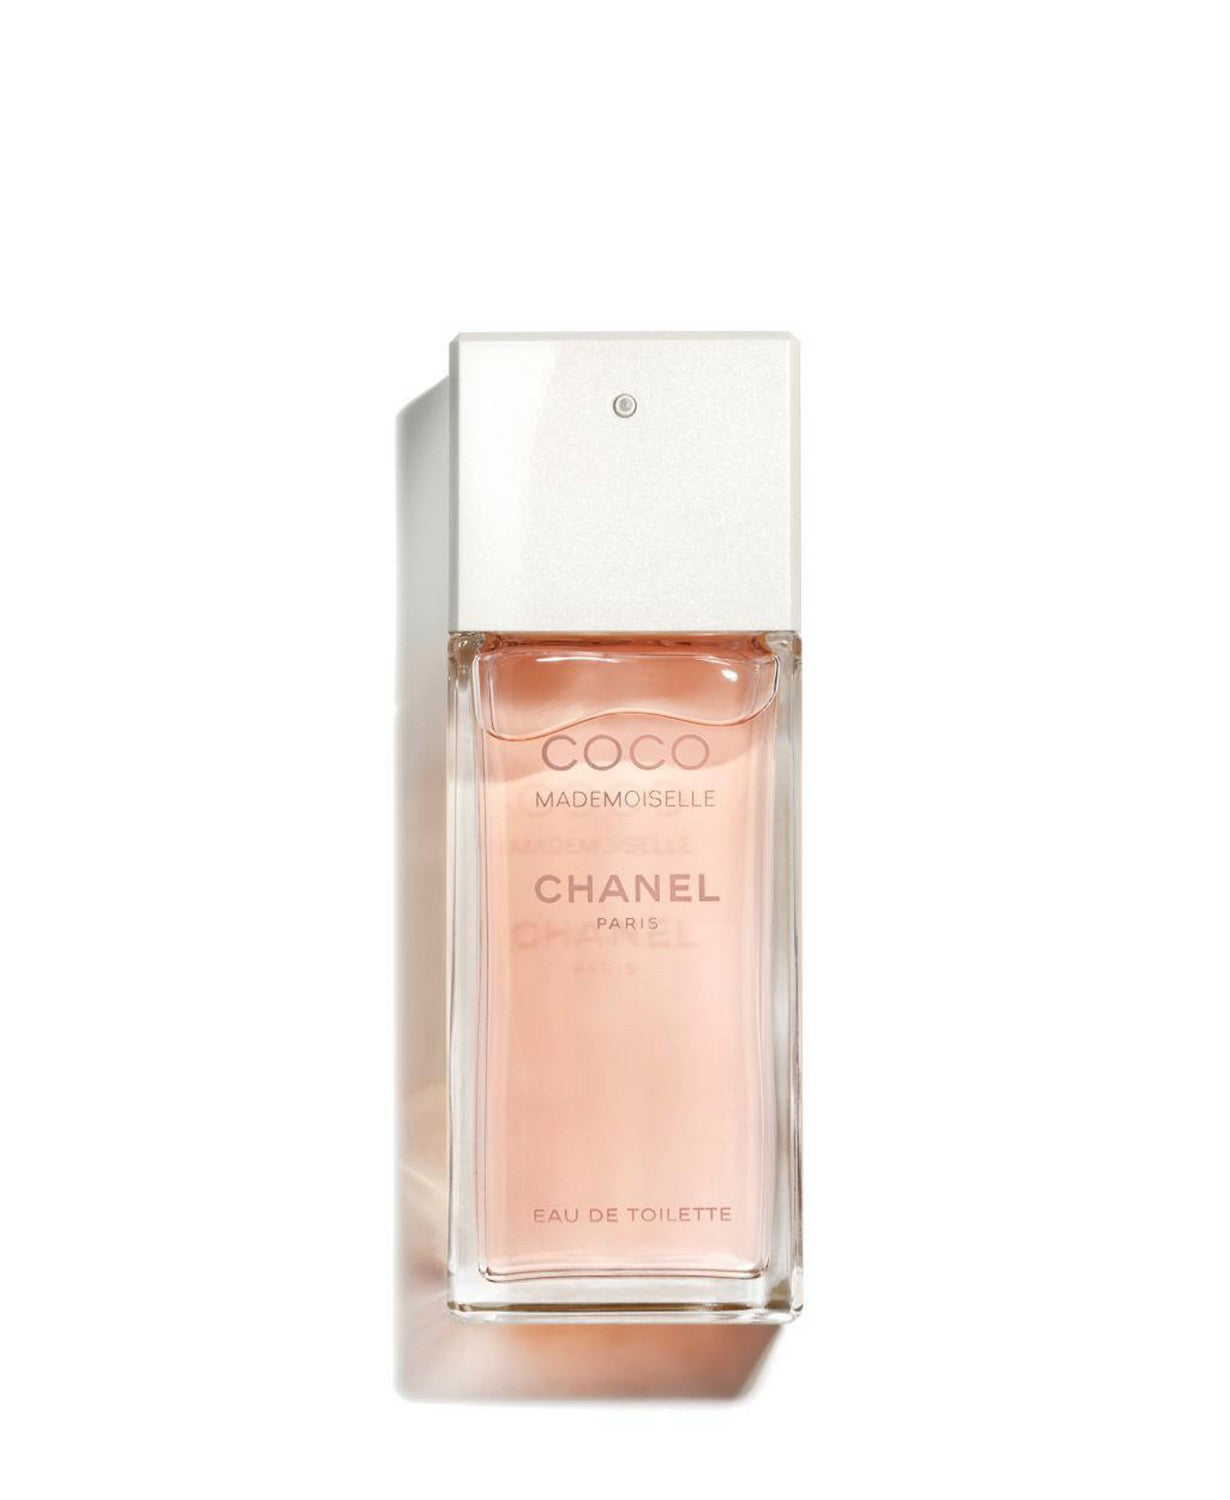 chanel perfume and lotion set